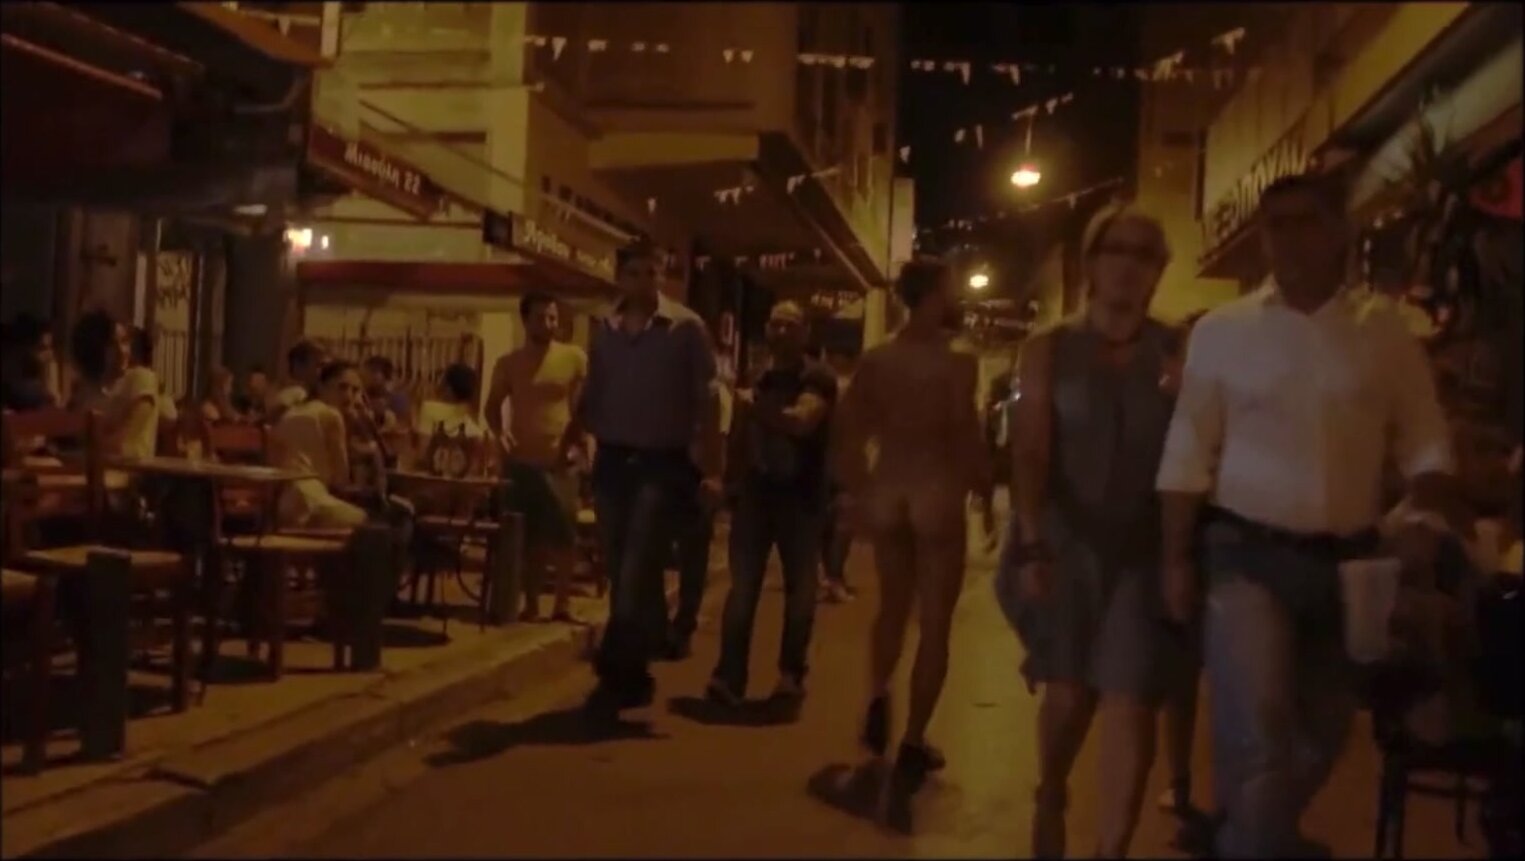 Naked Italian guy walks through crowds in Ibiza